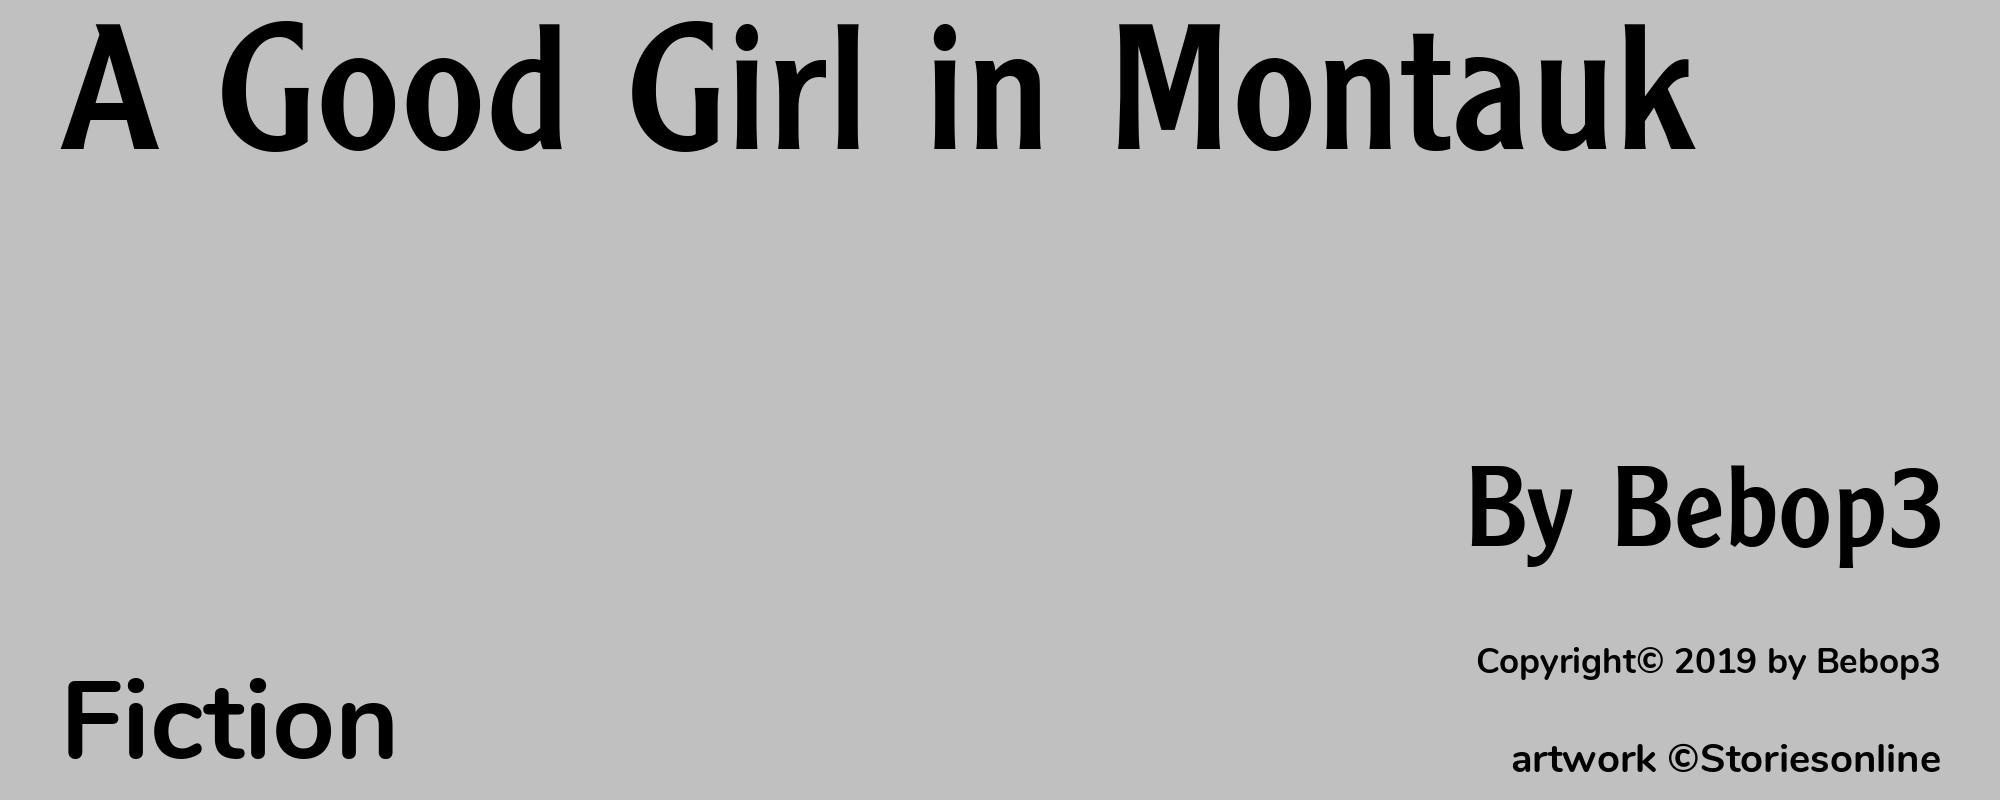 A Good Girl in Montauk - Cover